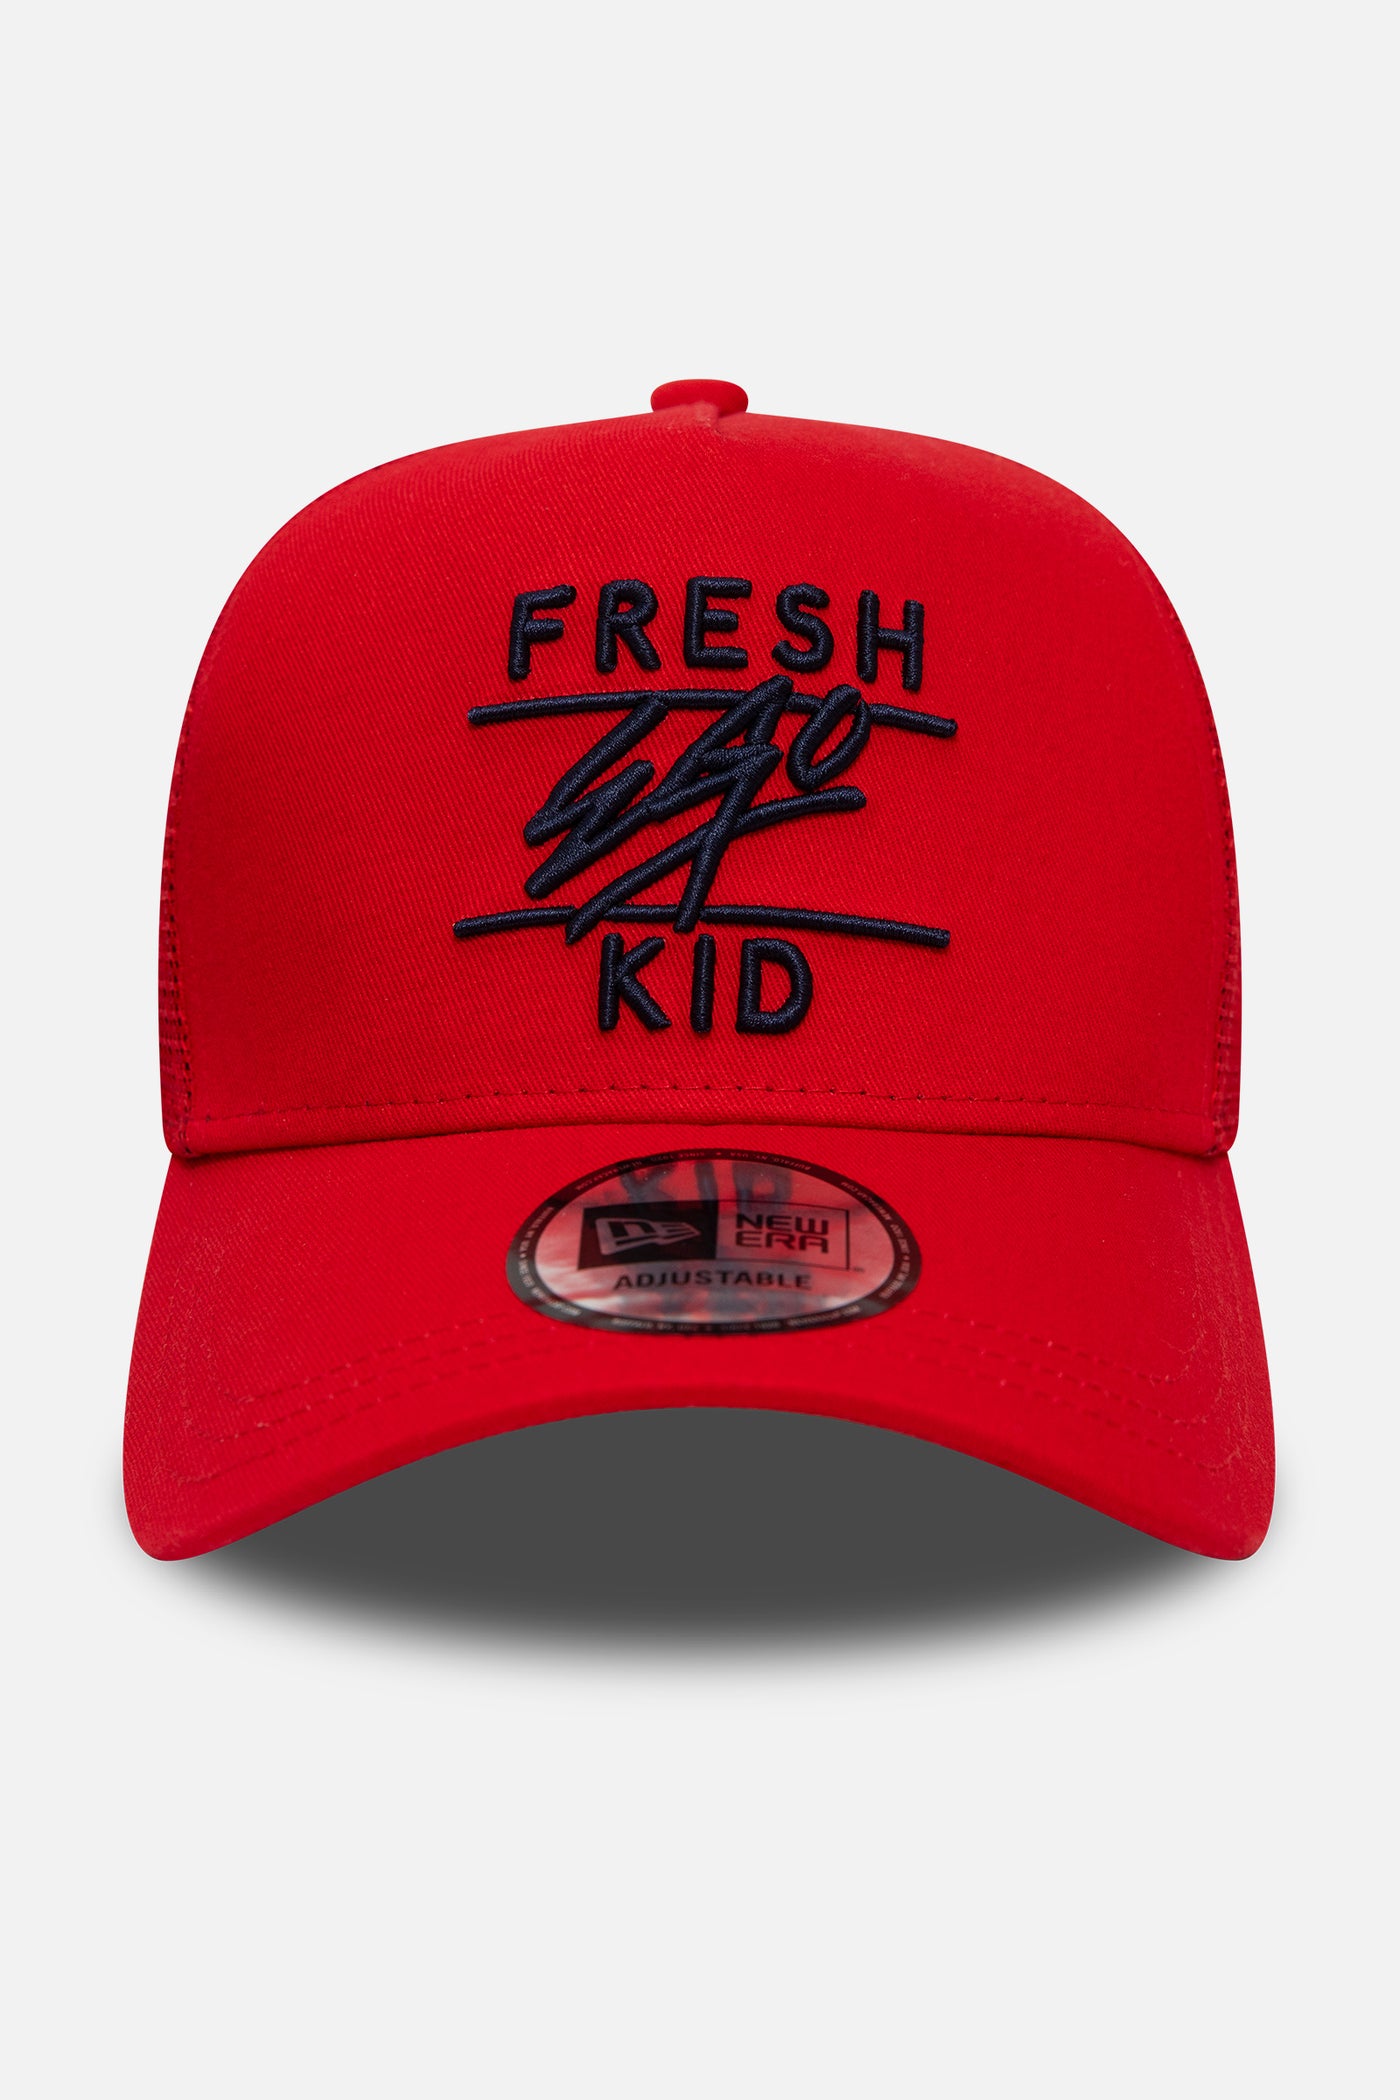 fresh ego kid new era New Era mesh trucker in red 